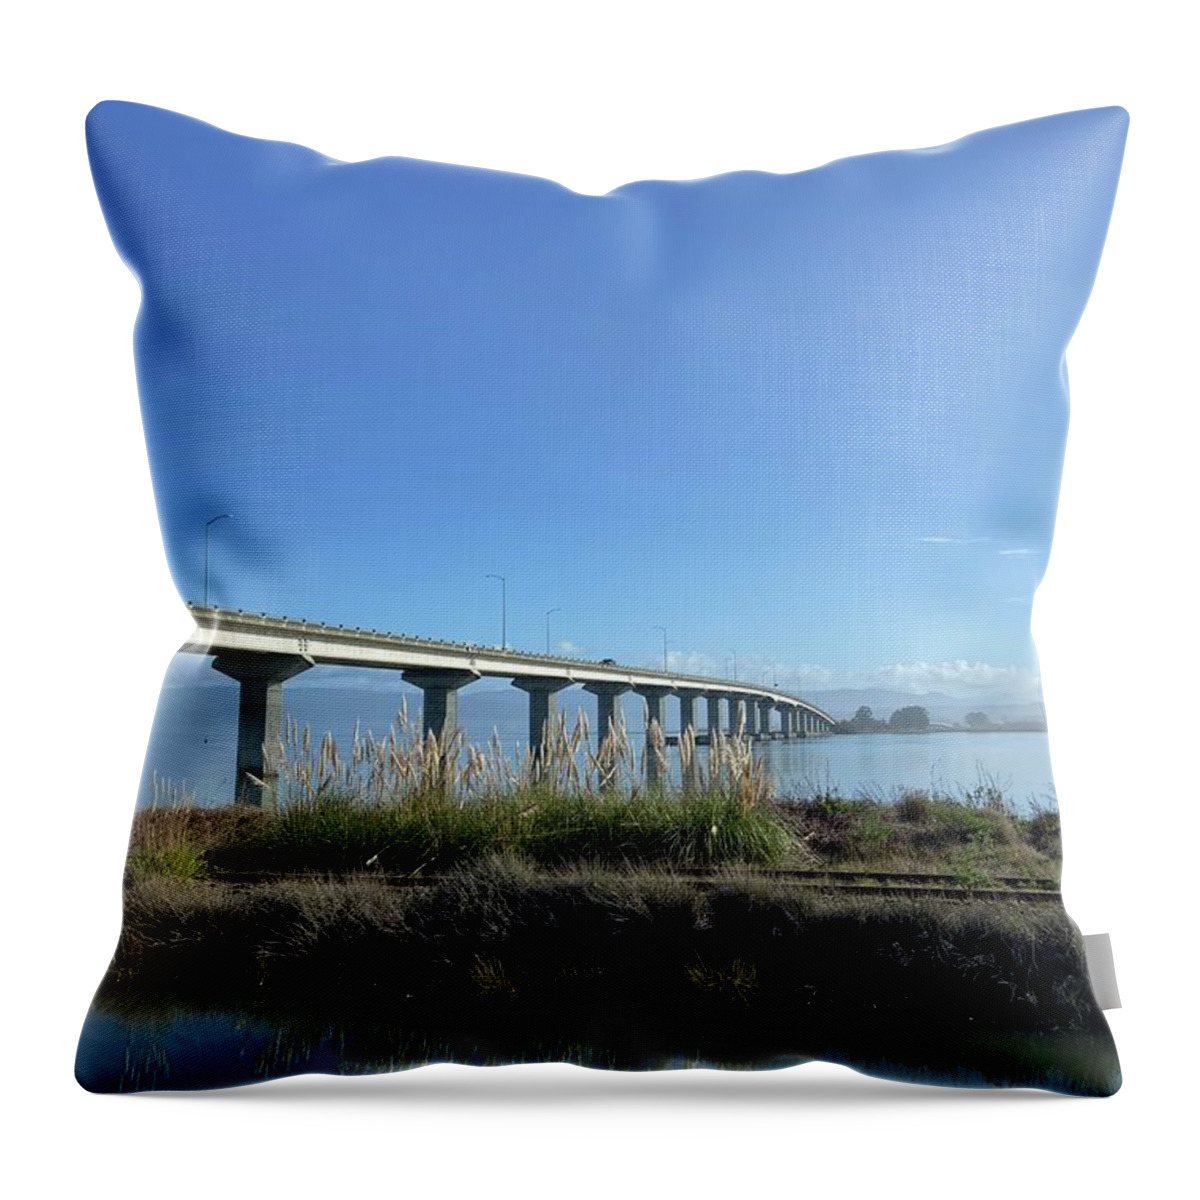 Humboldt Bay Bridge Throw Pillow featuring the photograph Humboldt Bay Bridge by Daniele Smith